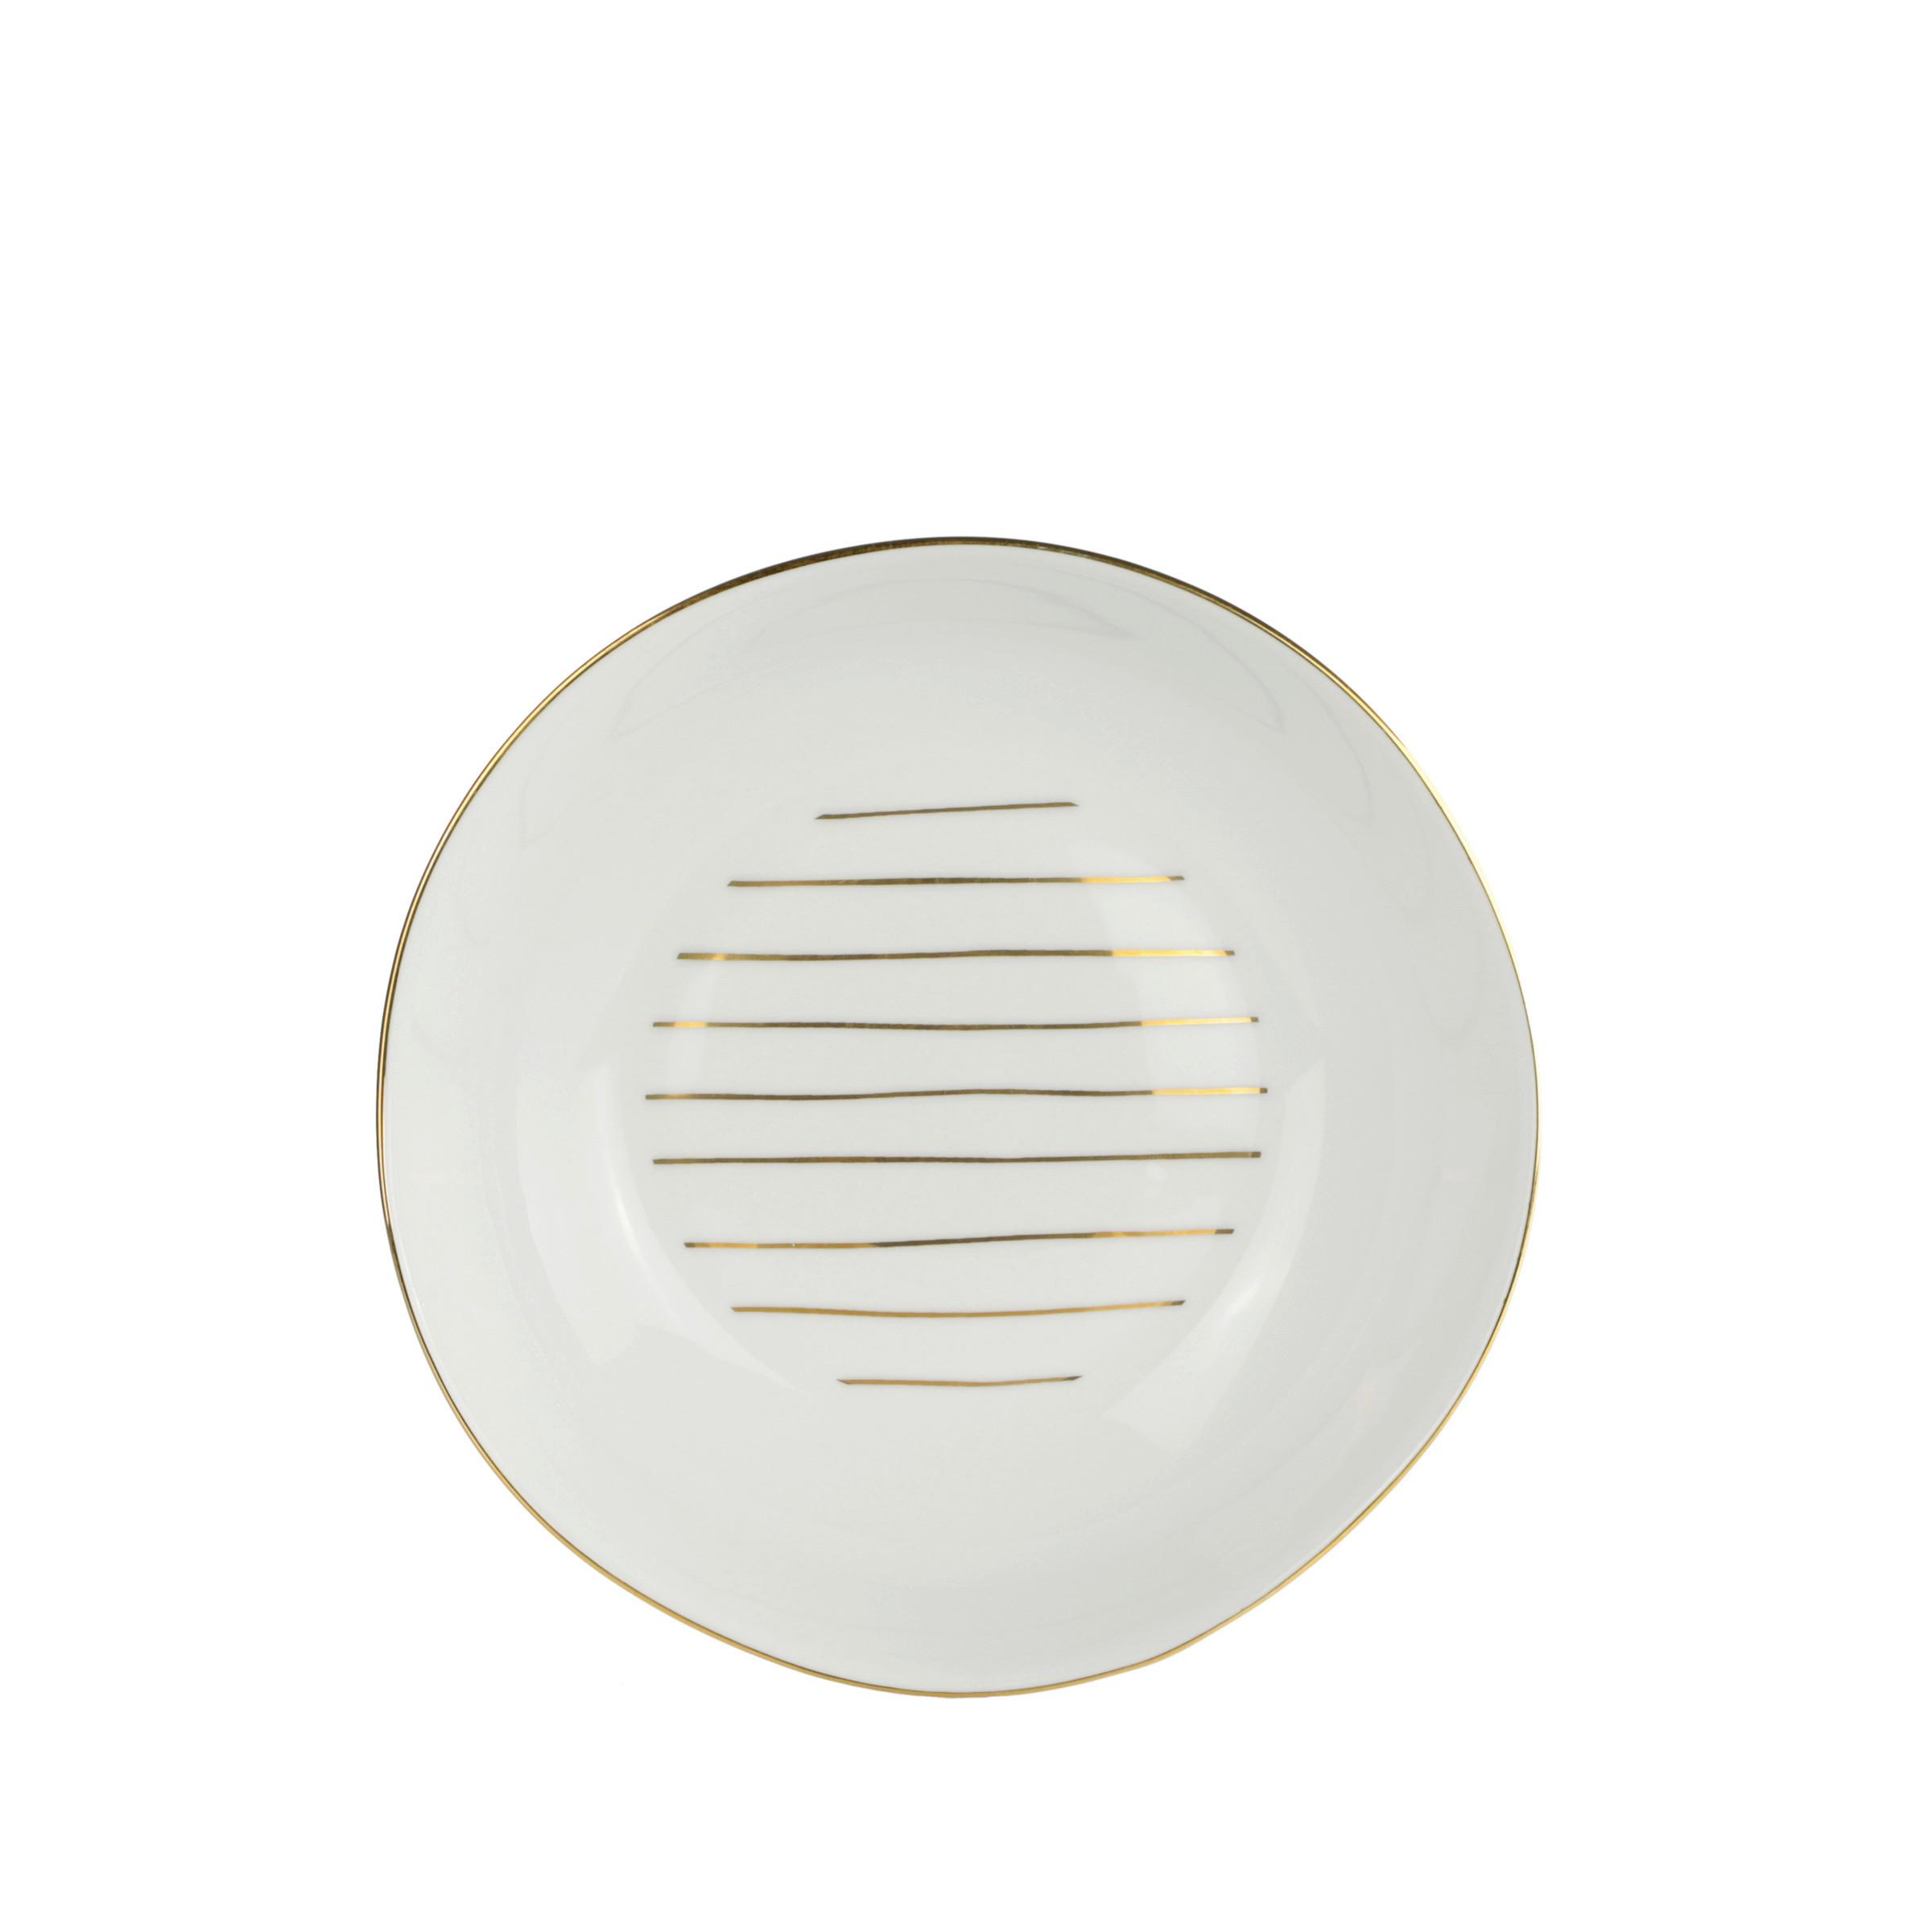 Duboki Tanjur 20,5cm Onix - bijela/zlatne boje, Modern, keramika (20,5cm) - Premium Living